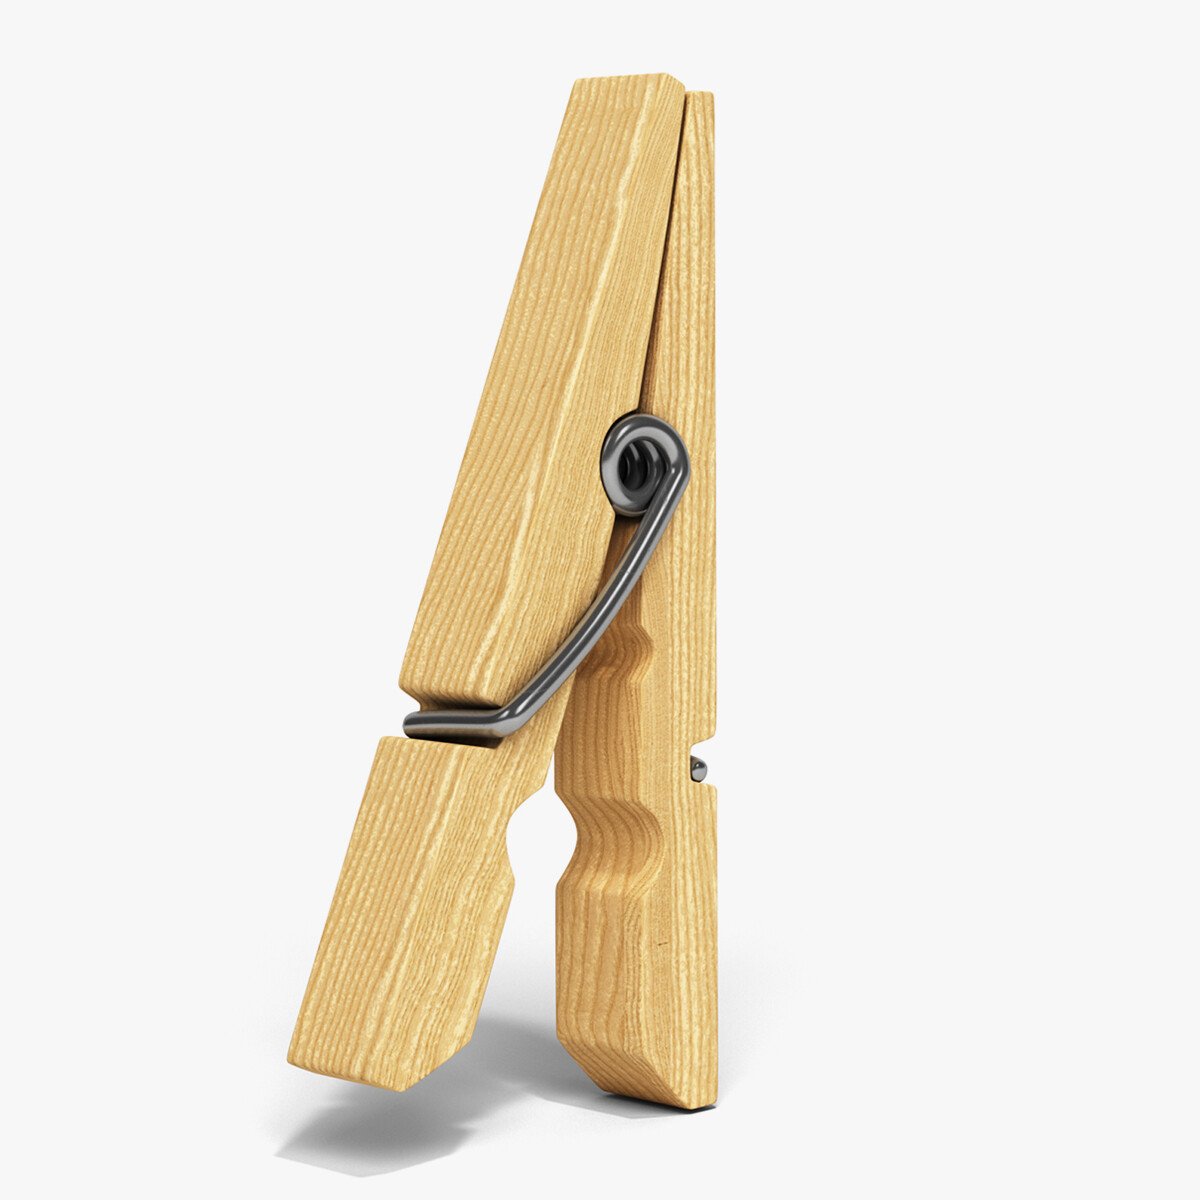 ArtStation - Wooden clothespin